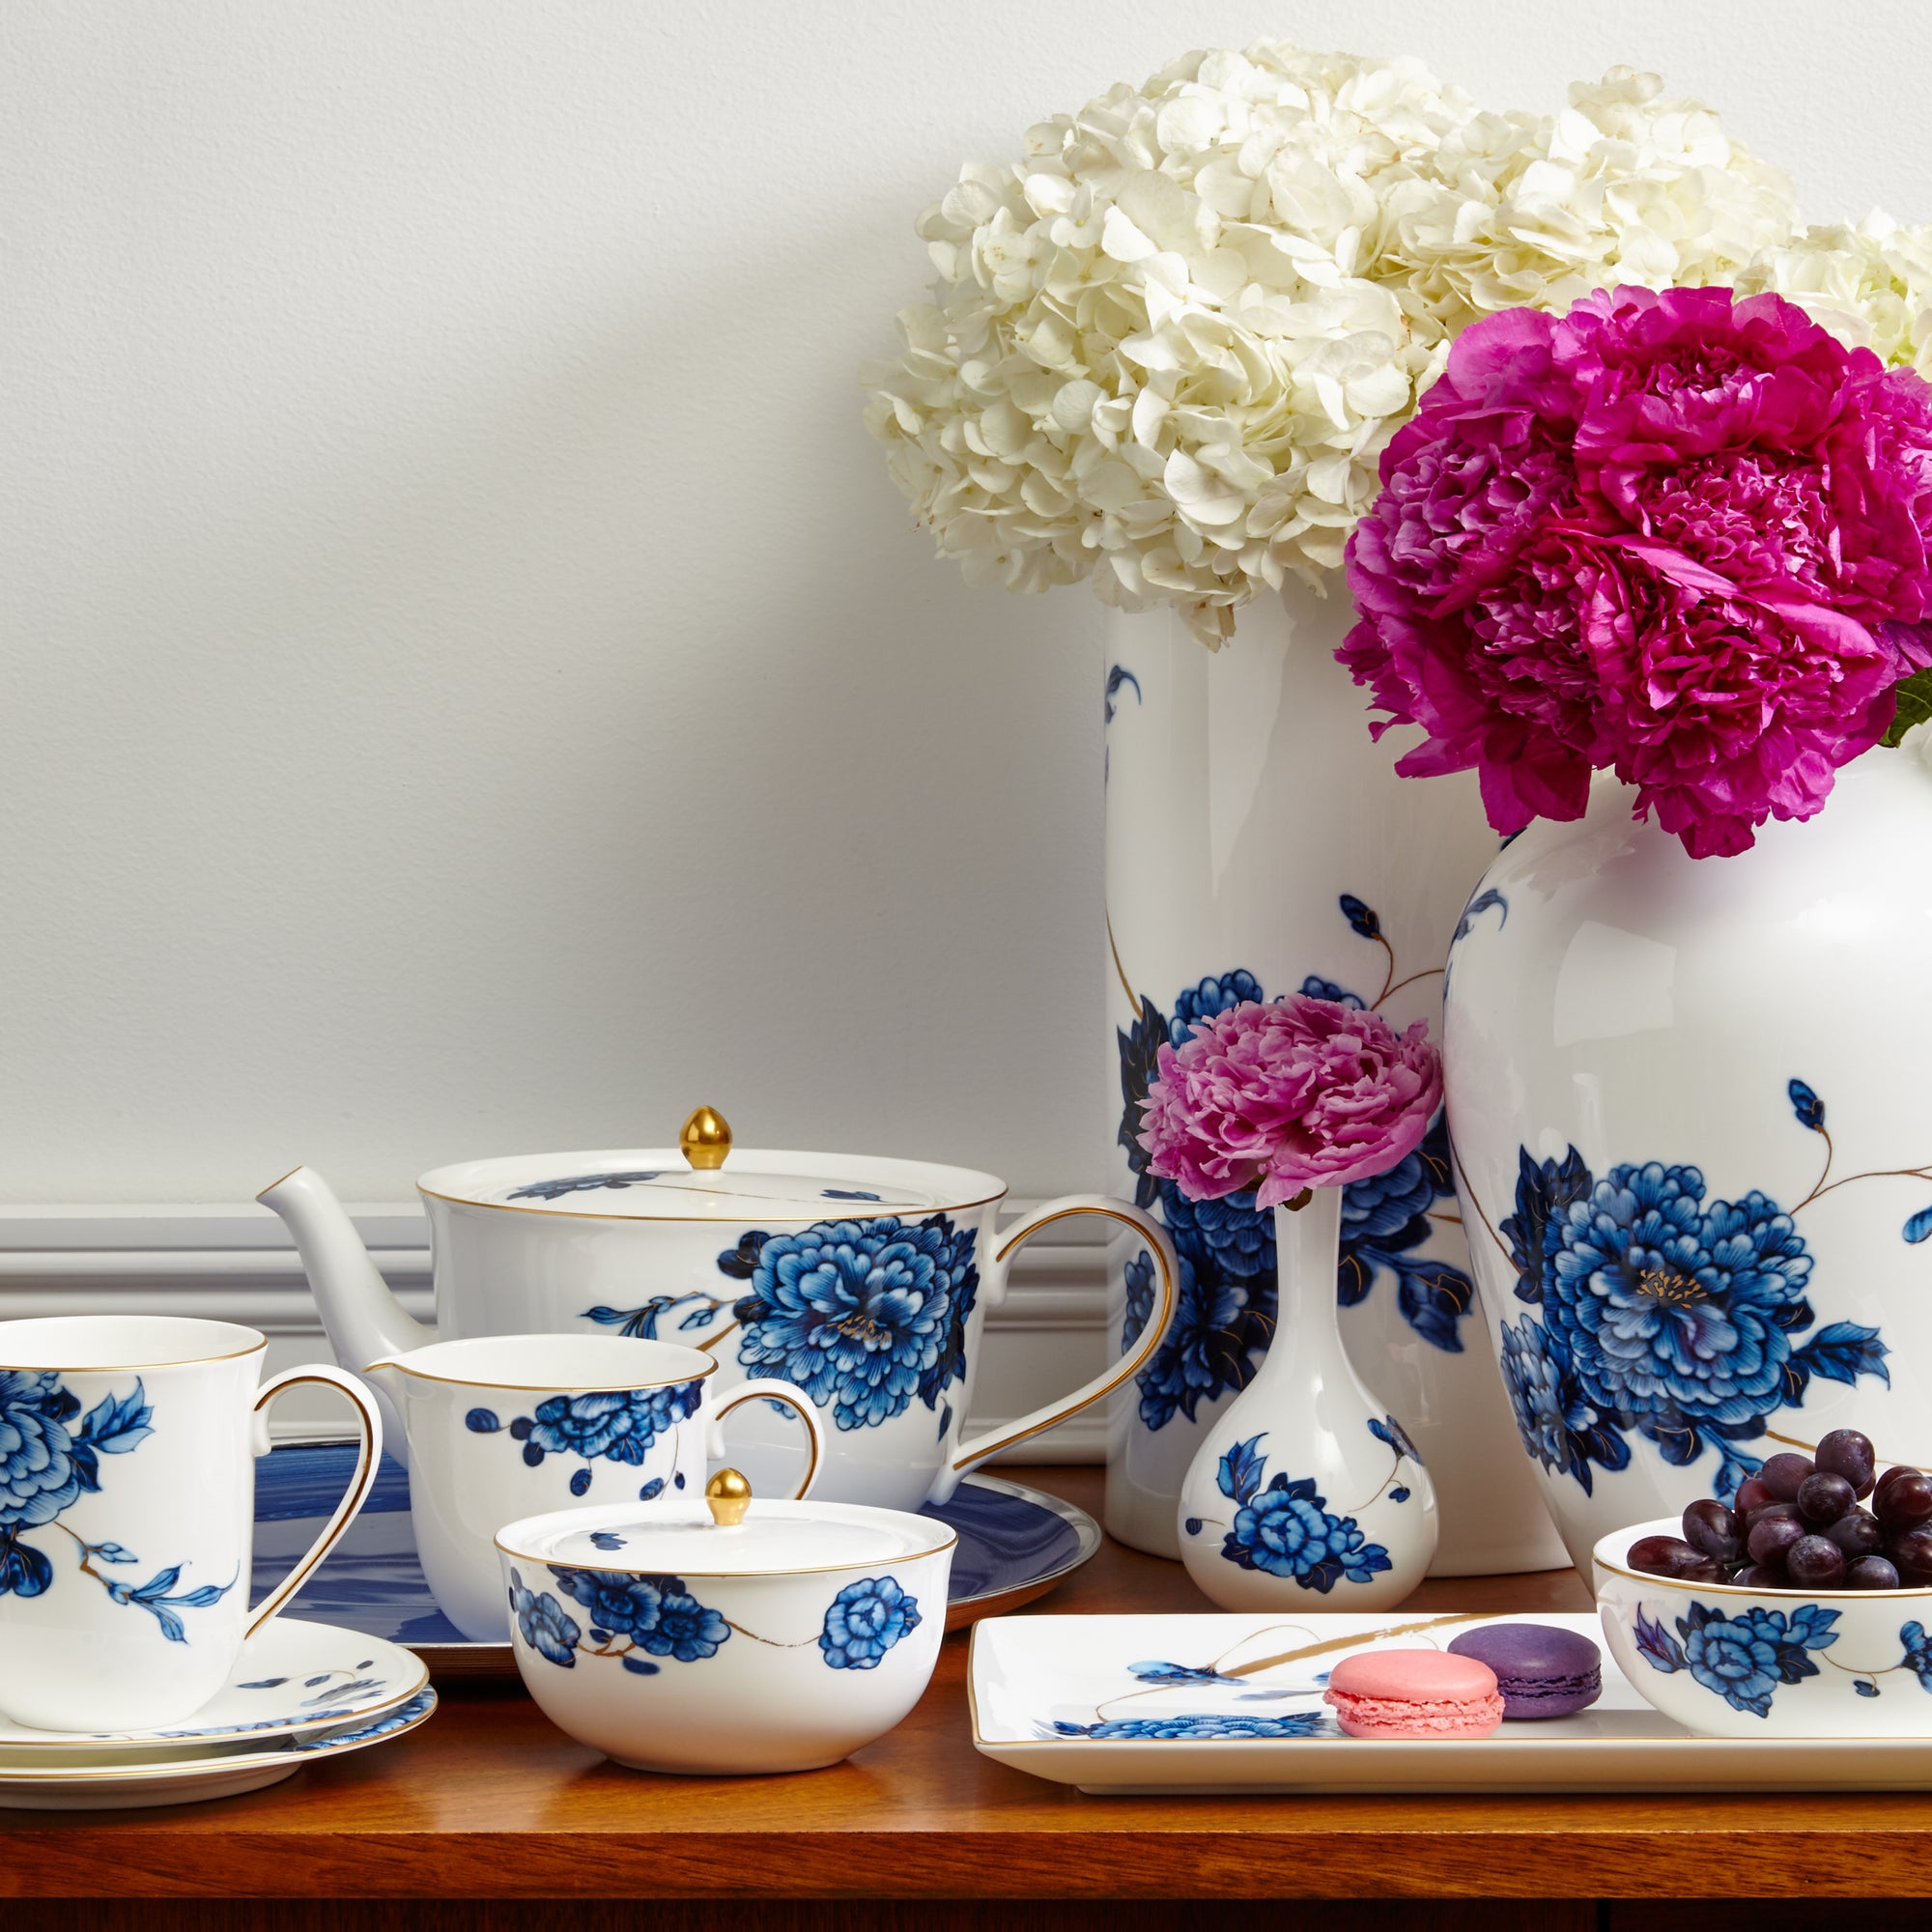 Emperor Flower Tea Cup & Saucer White Background Photo